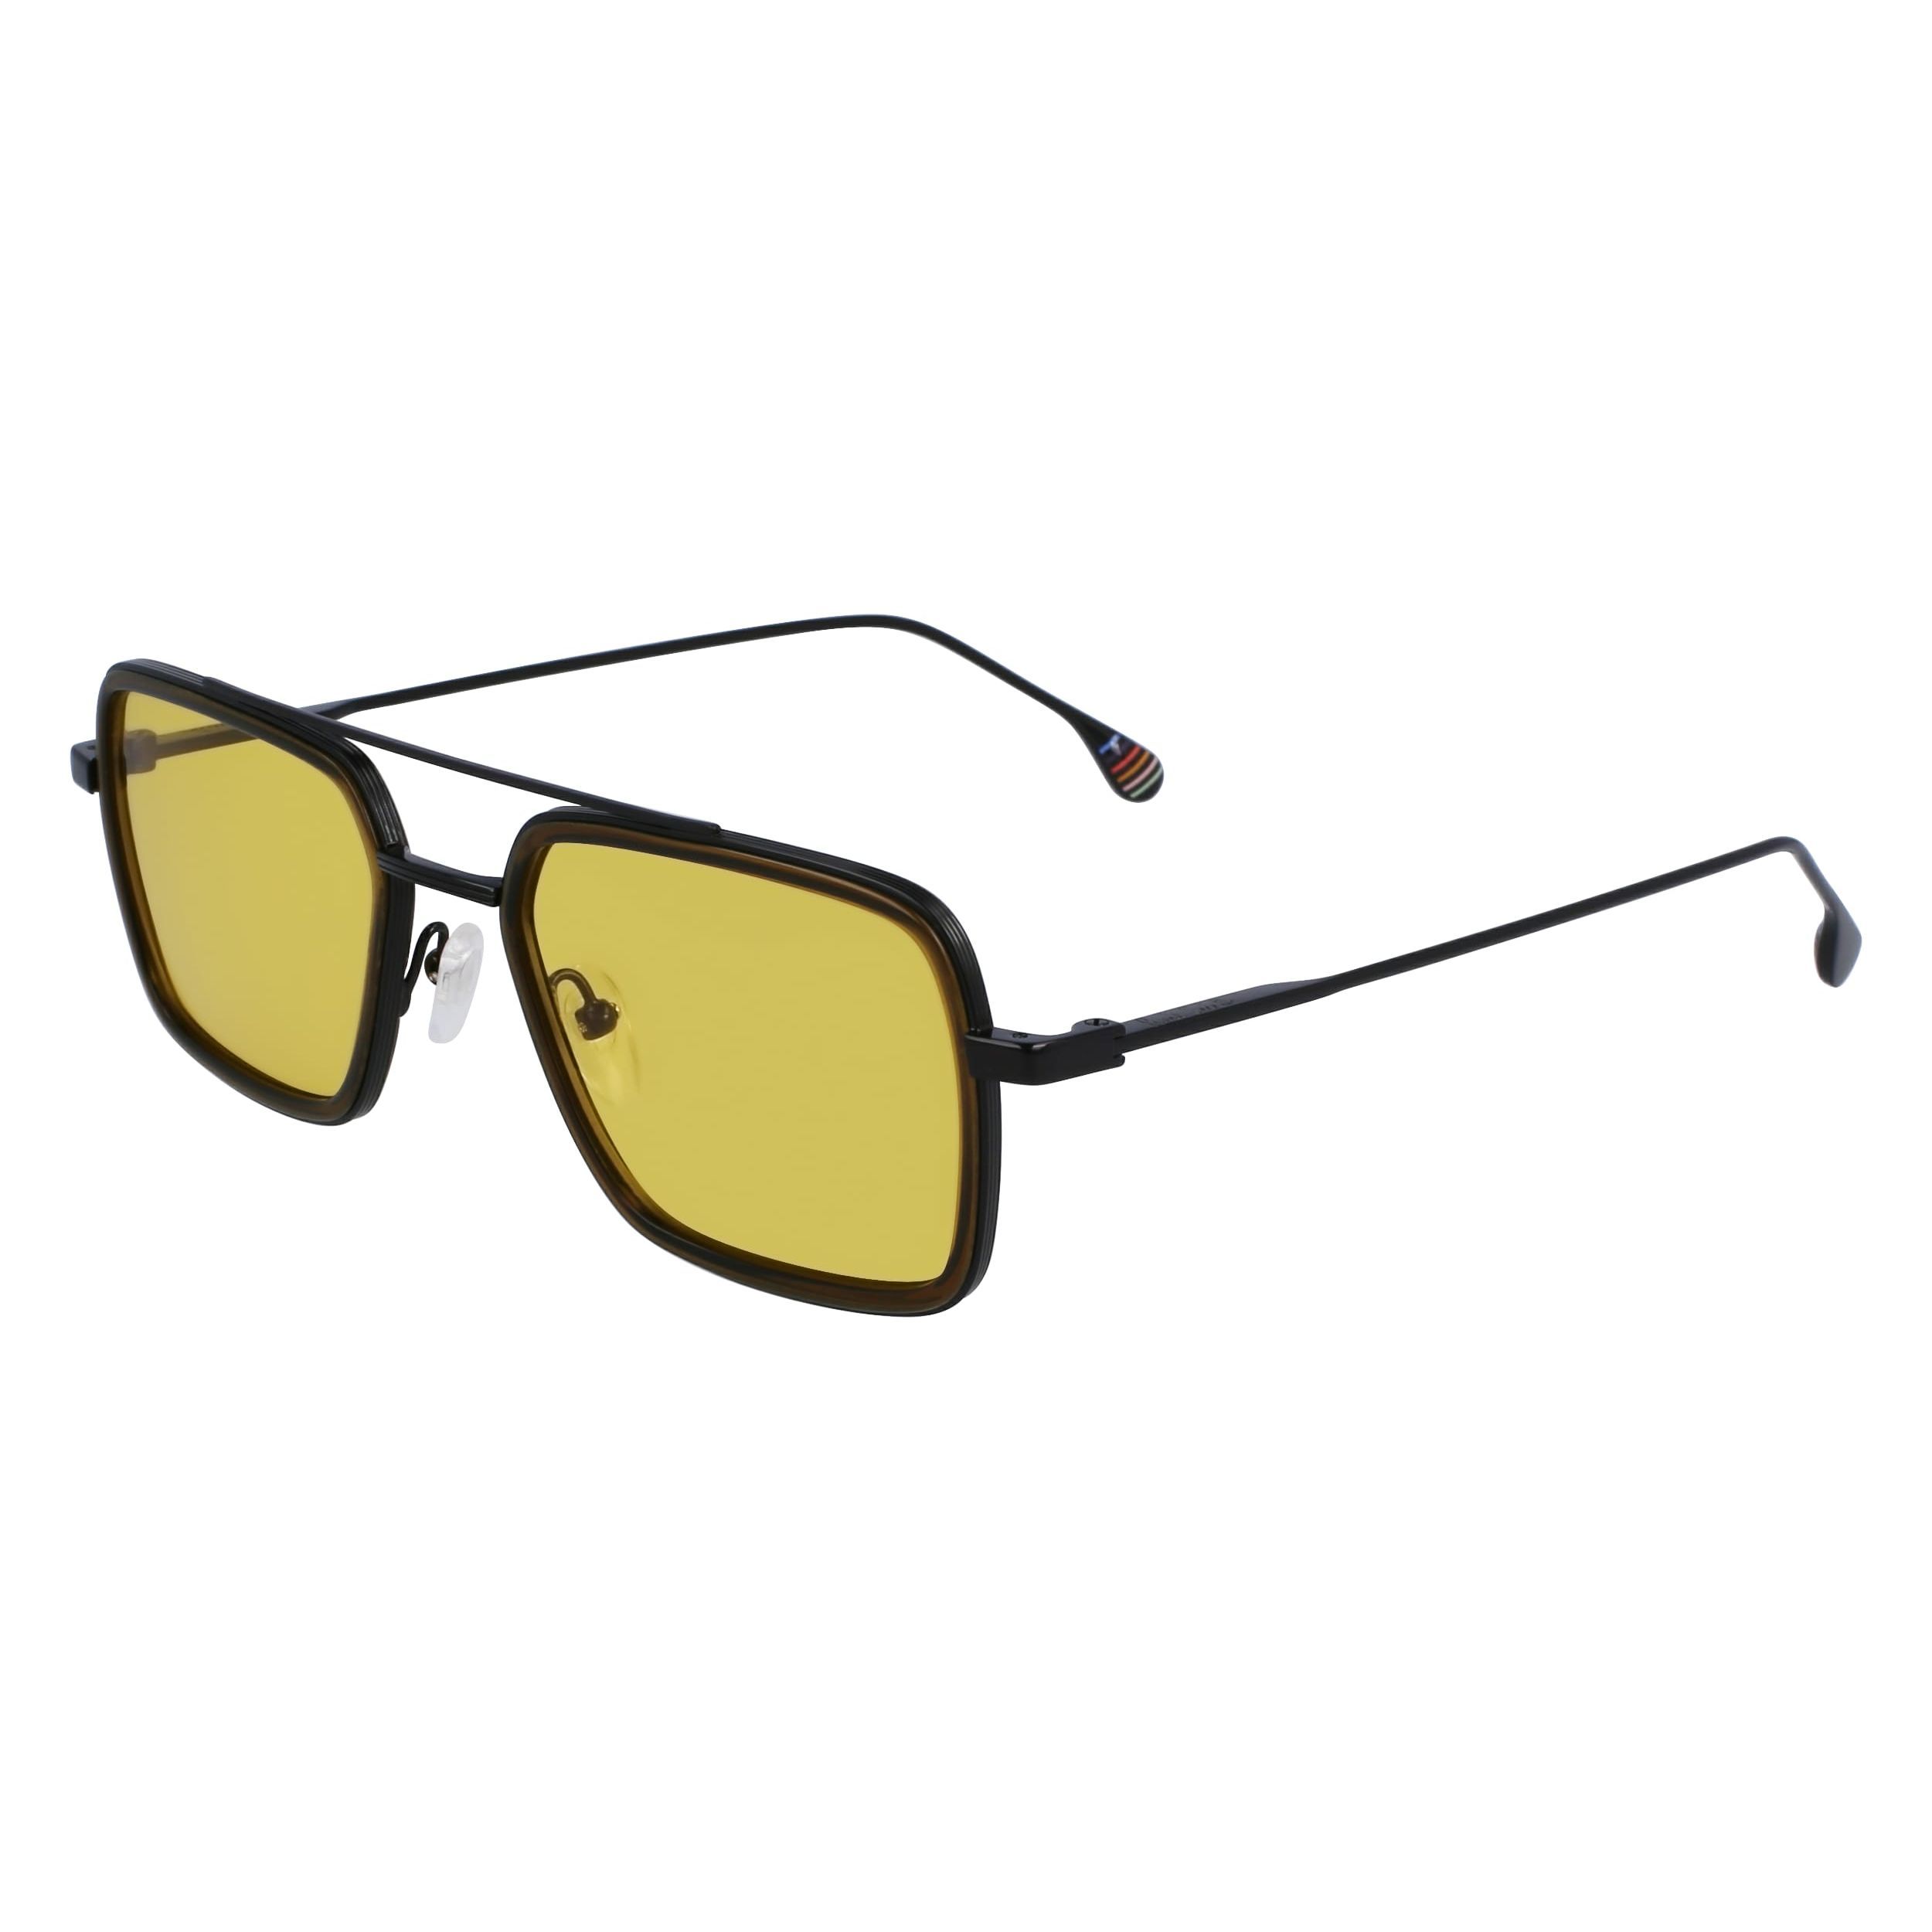 HUGON Rectangle Sunglasses 001 - size 52